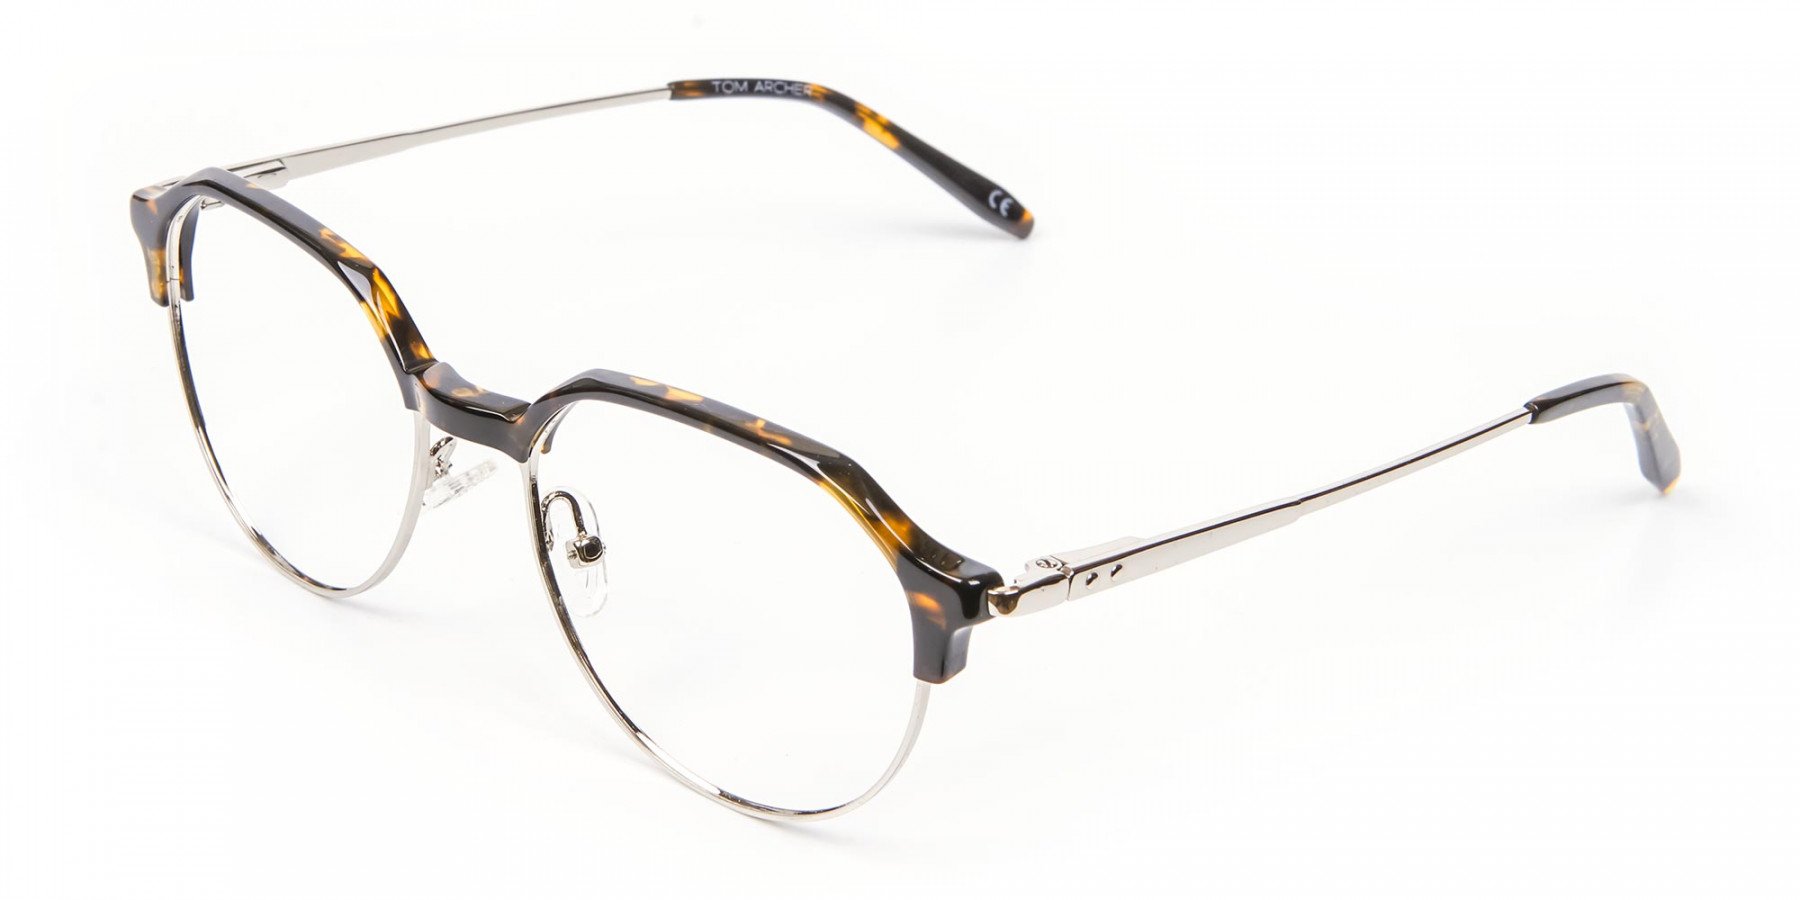 Havana & Tortoiseshell Browline Style Glasses - 1